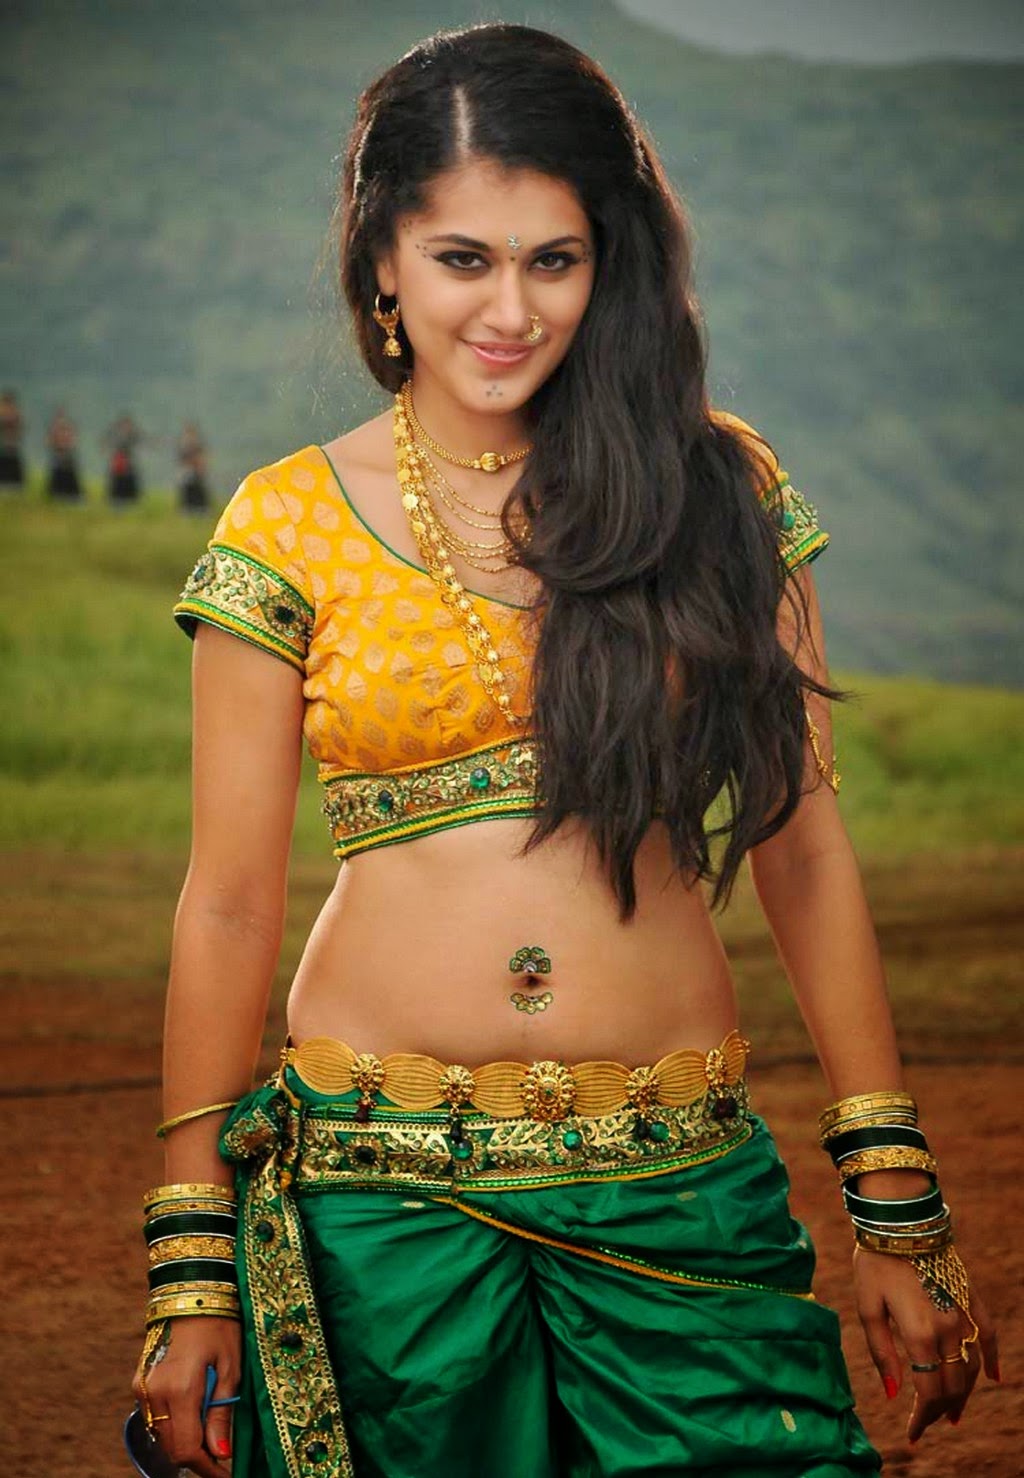 Beautiful Indian Girls | Most Beautiful Indian Girl Images 